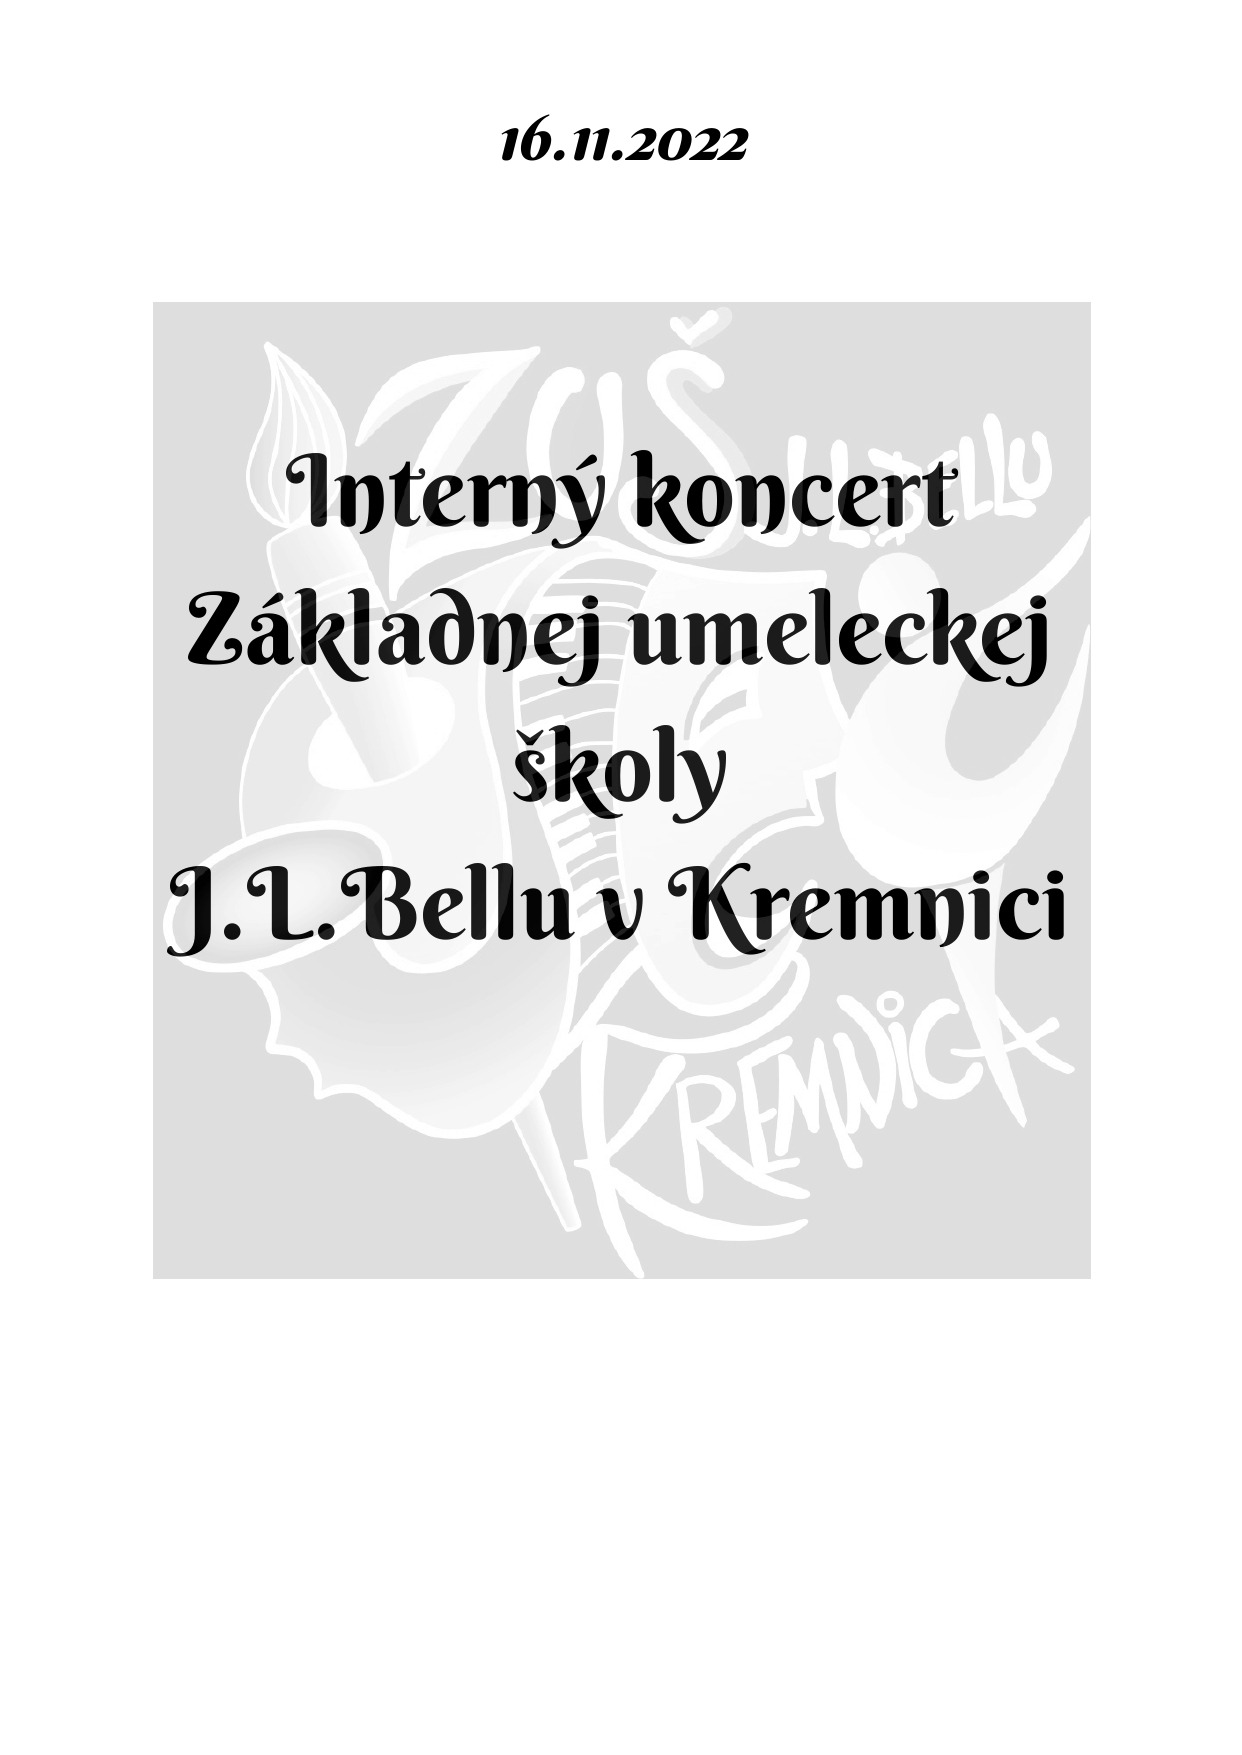 Pozvánka na online interný koncert dnes 16.11. o 17:00 - Obrázok 1